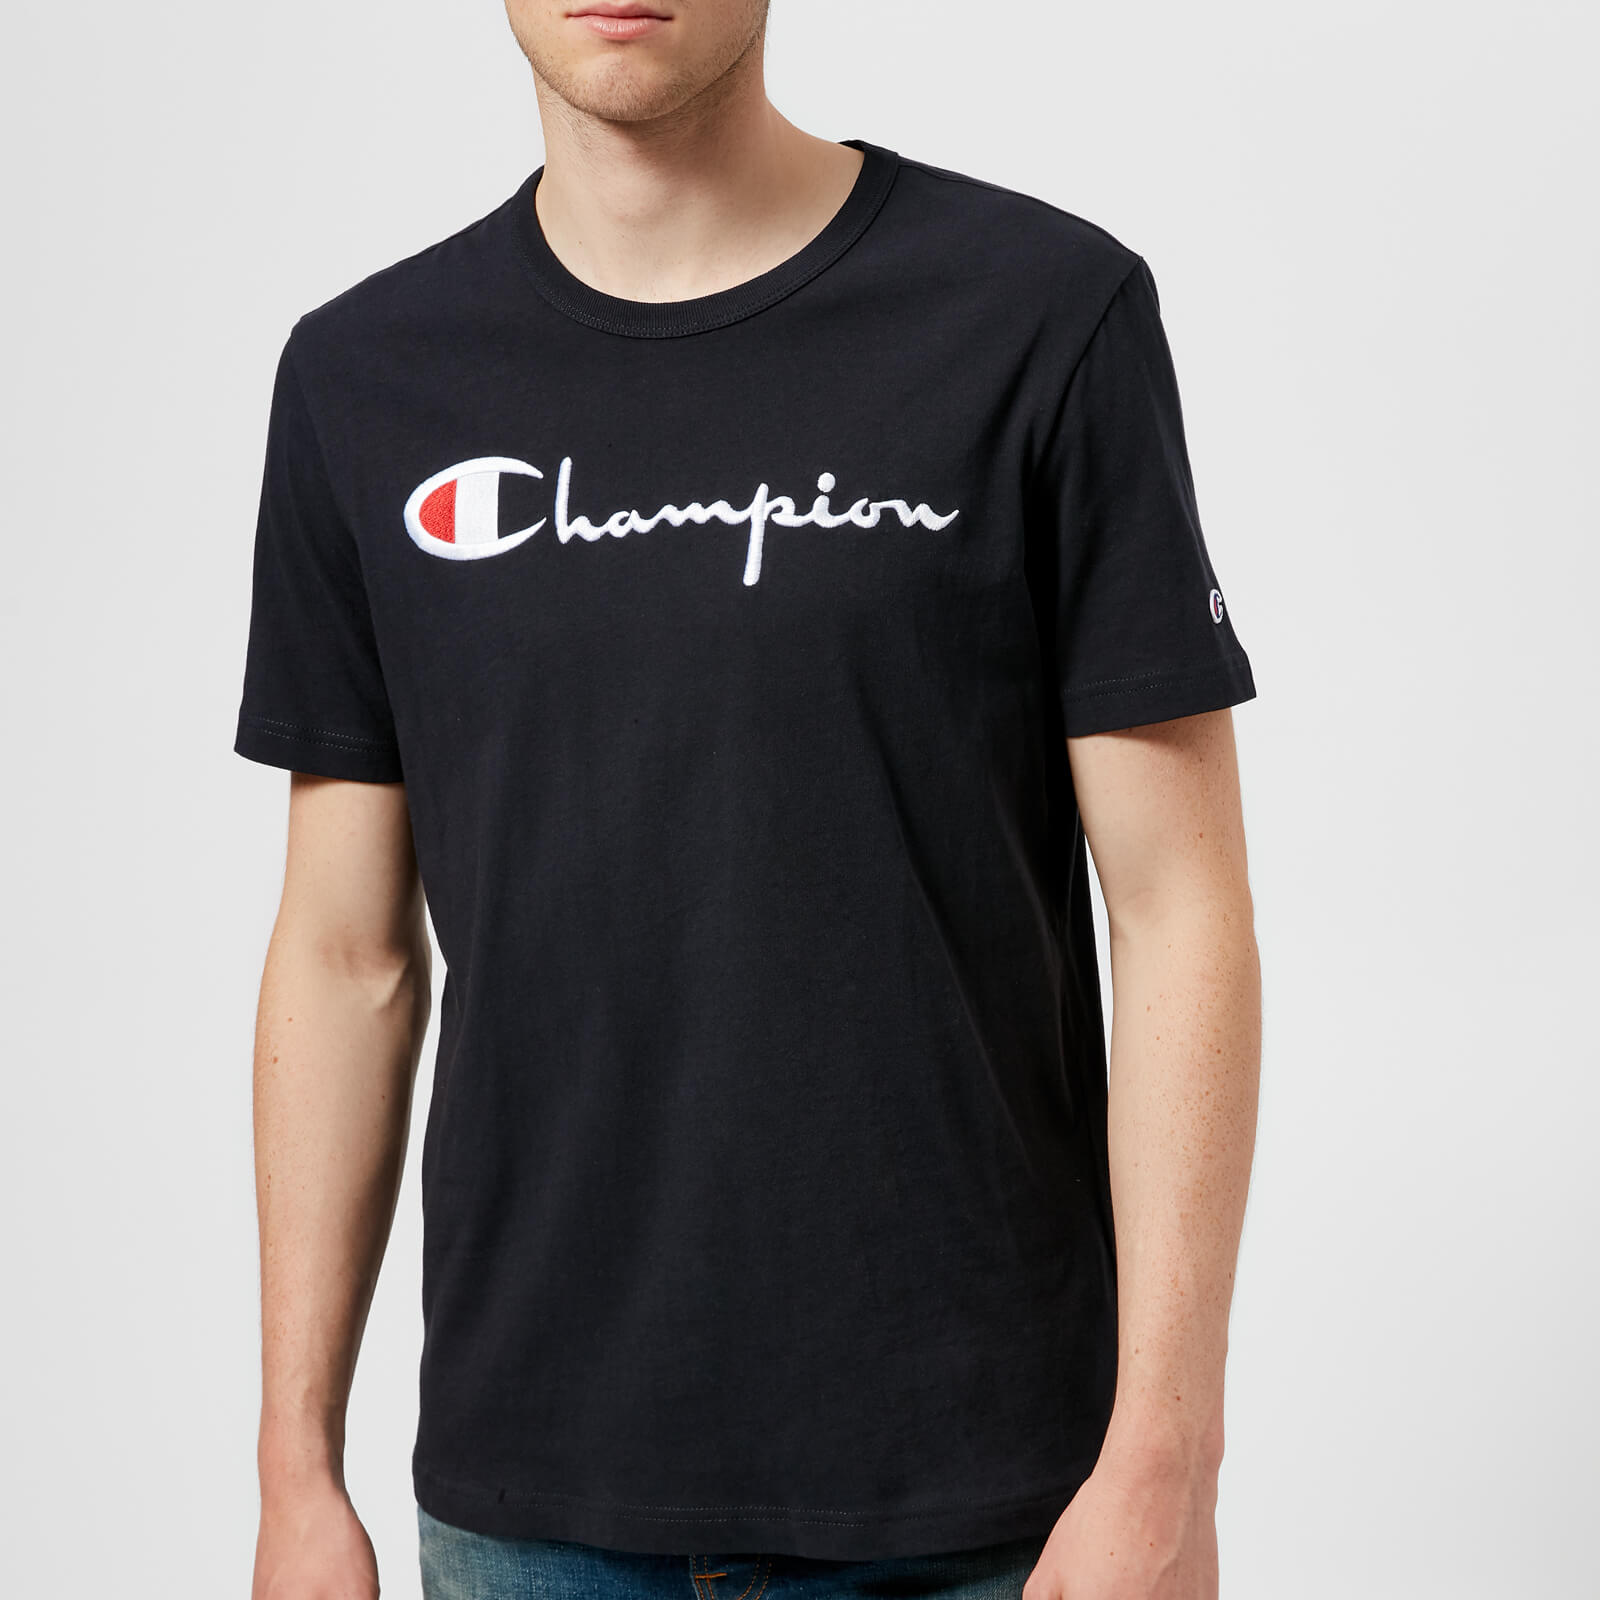 champion t shirt on sale